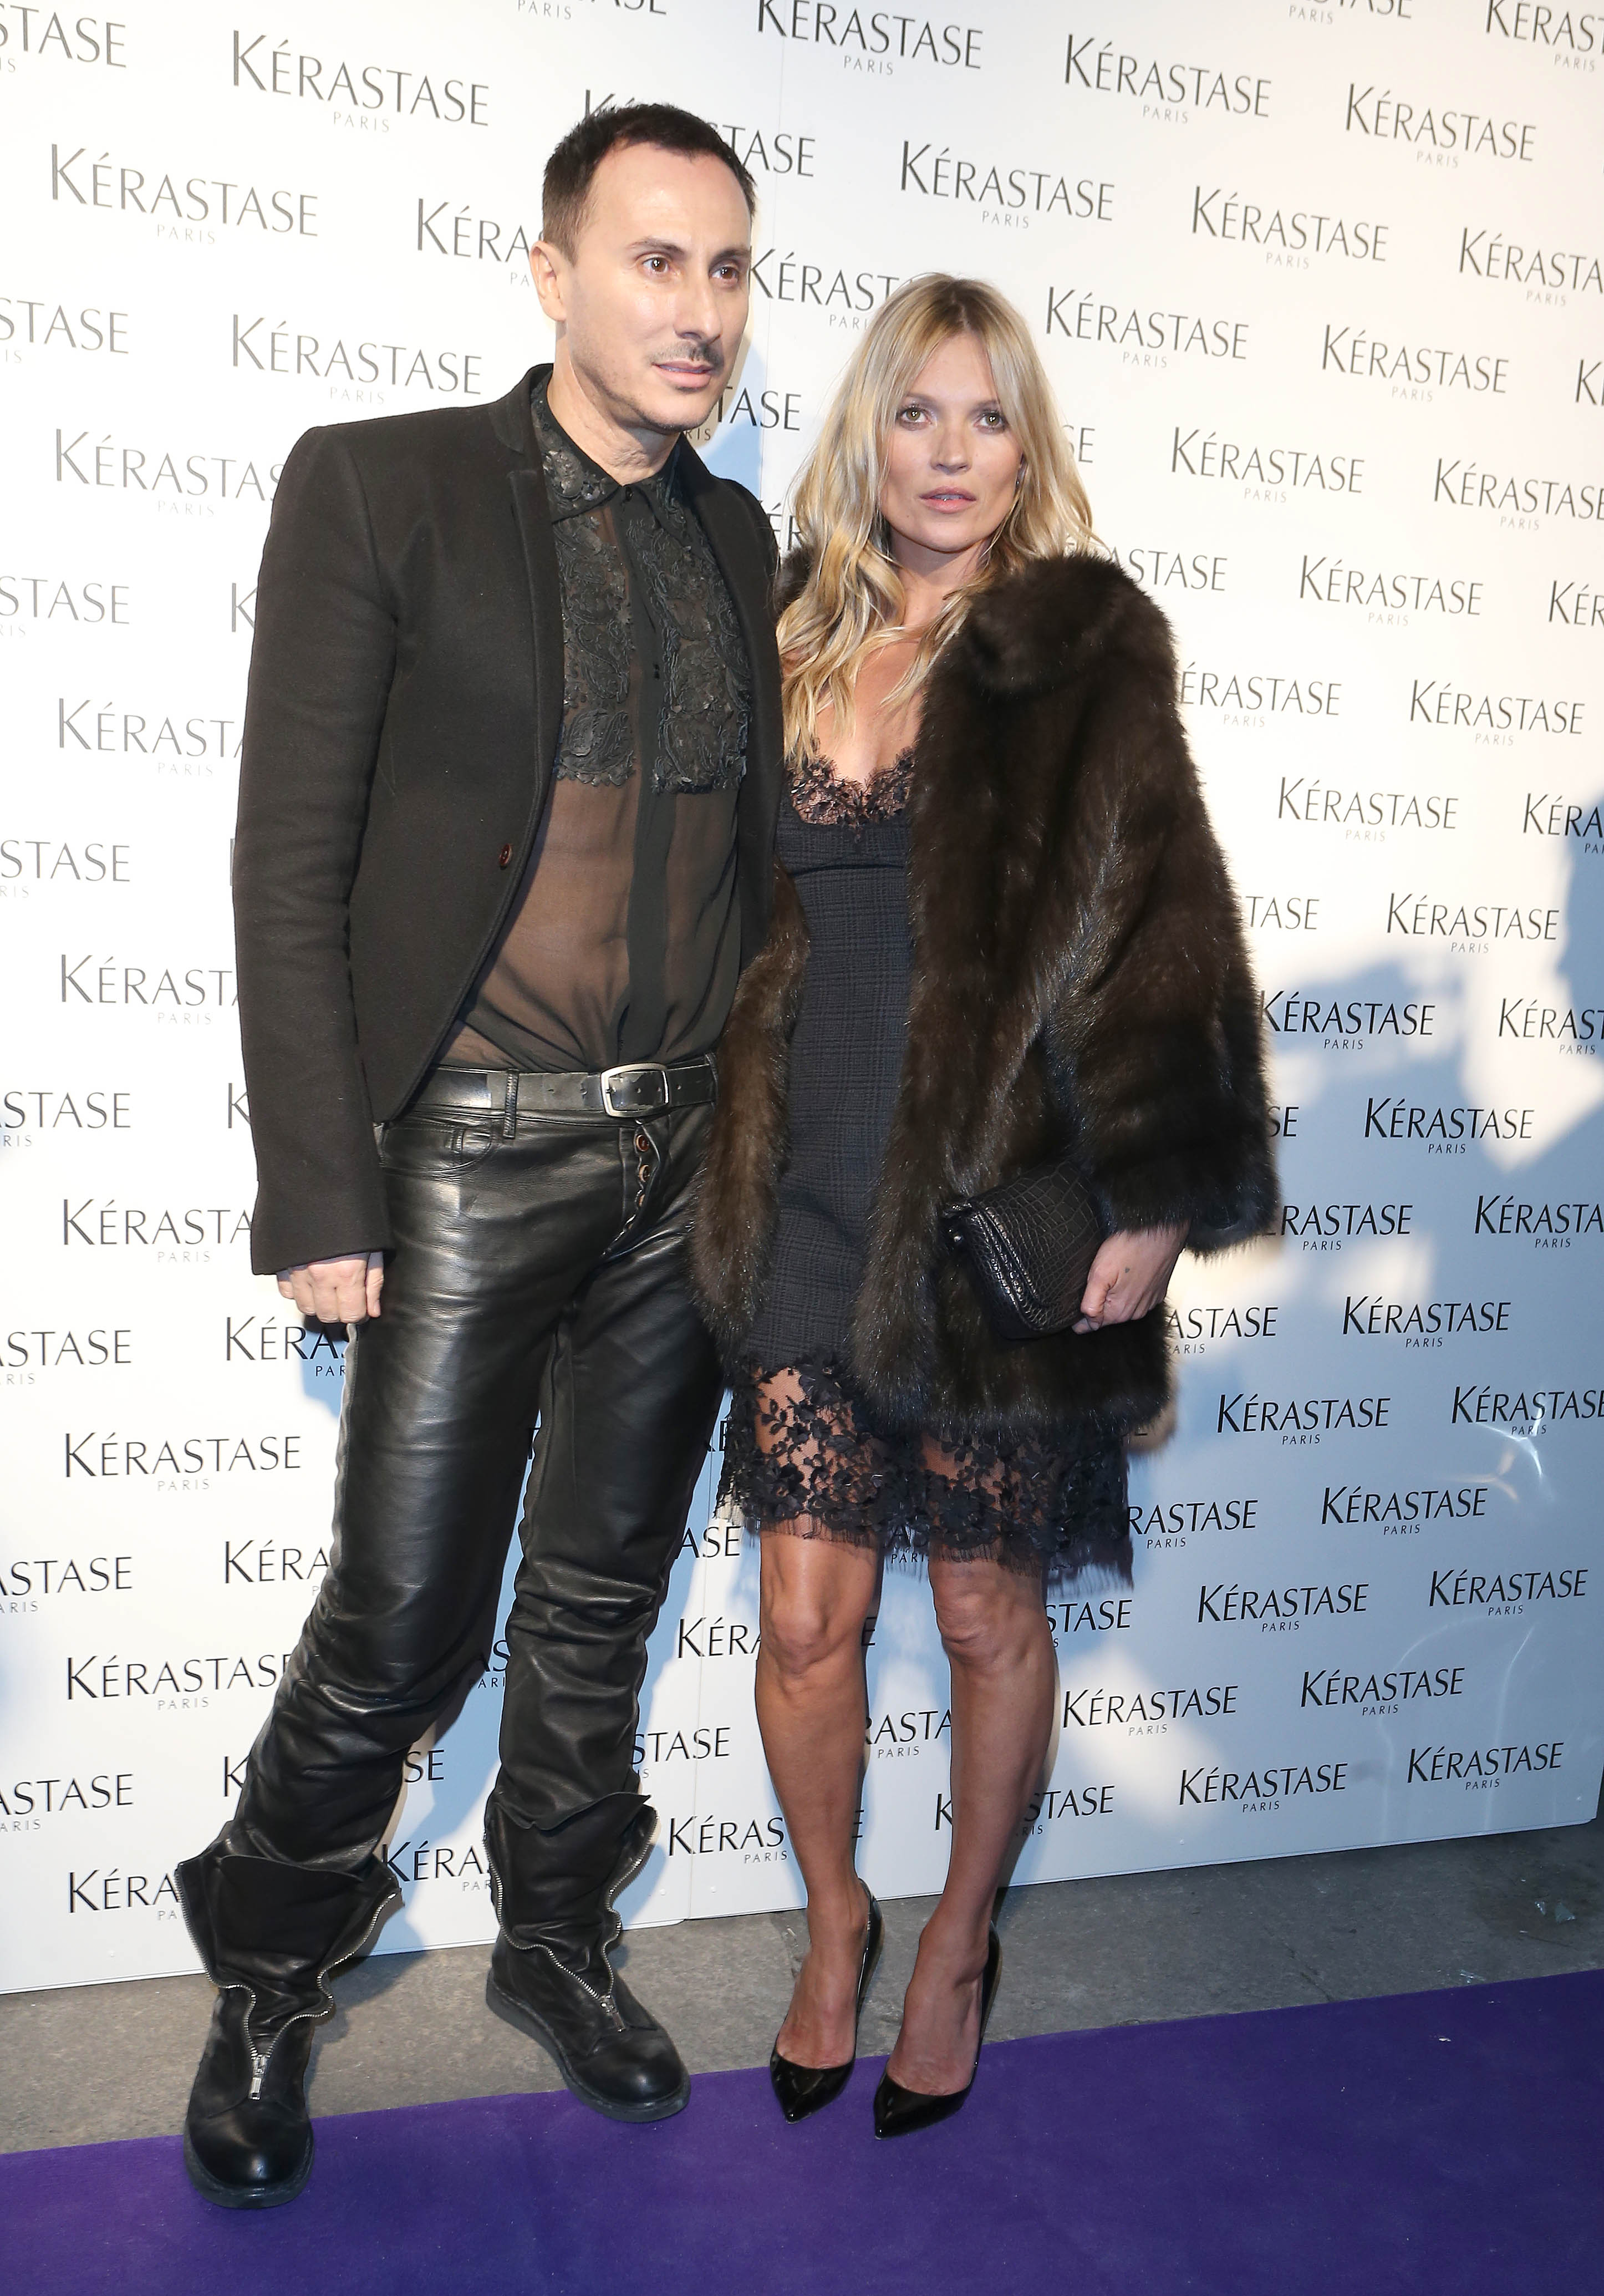 Kate Moss arrives at a Kerastase event in London